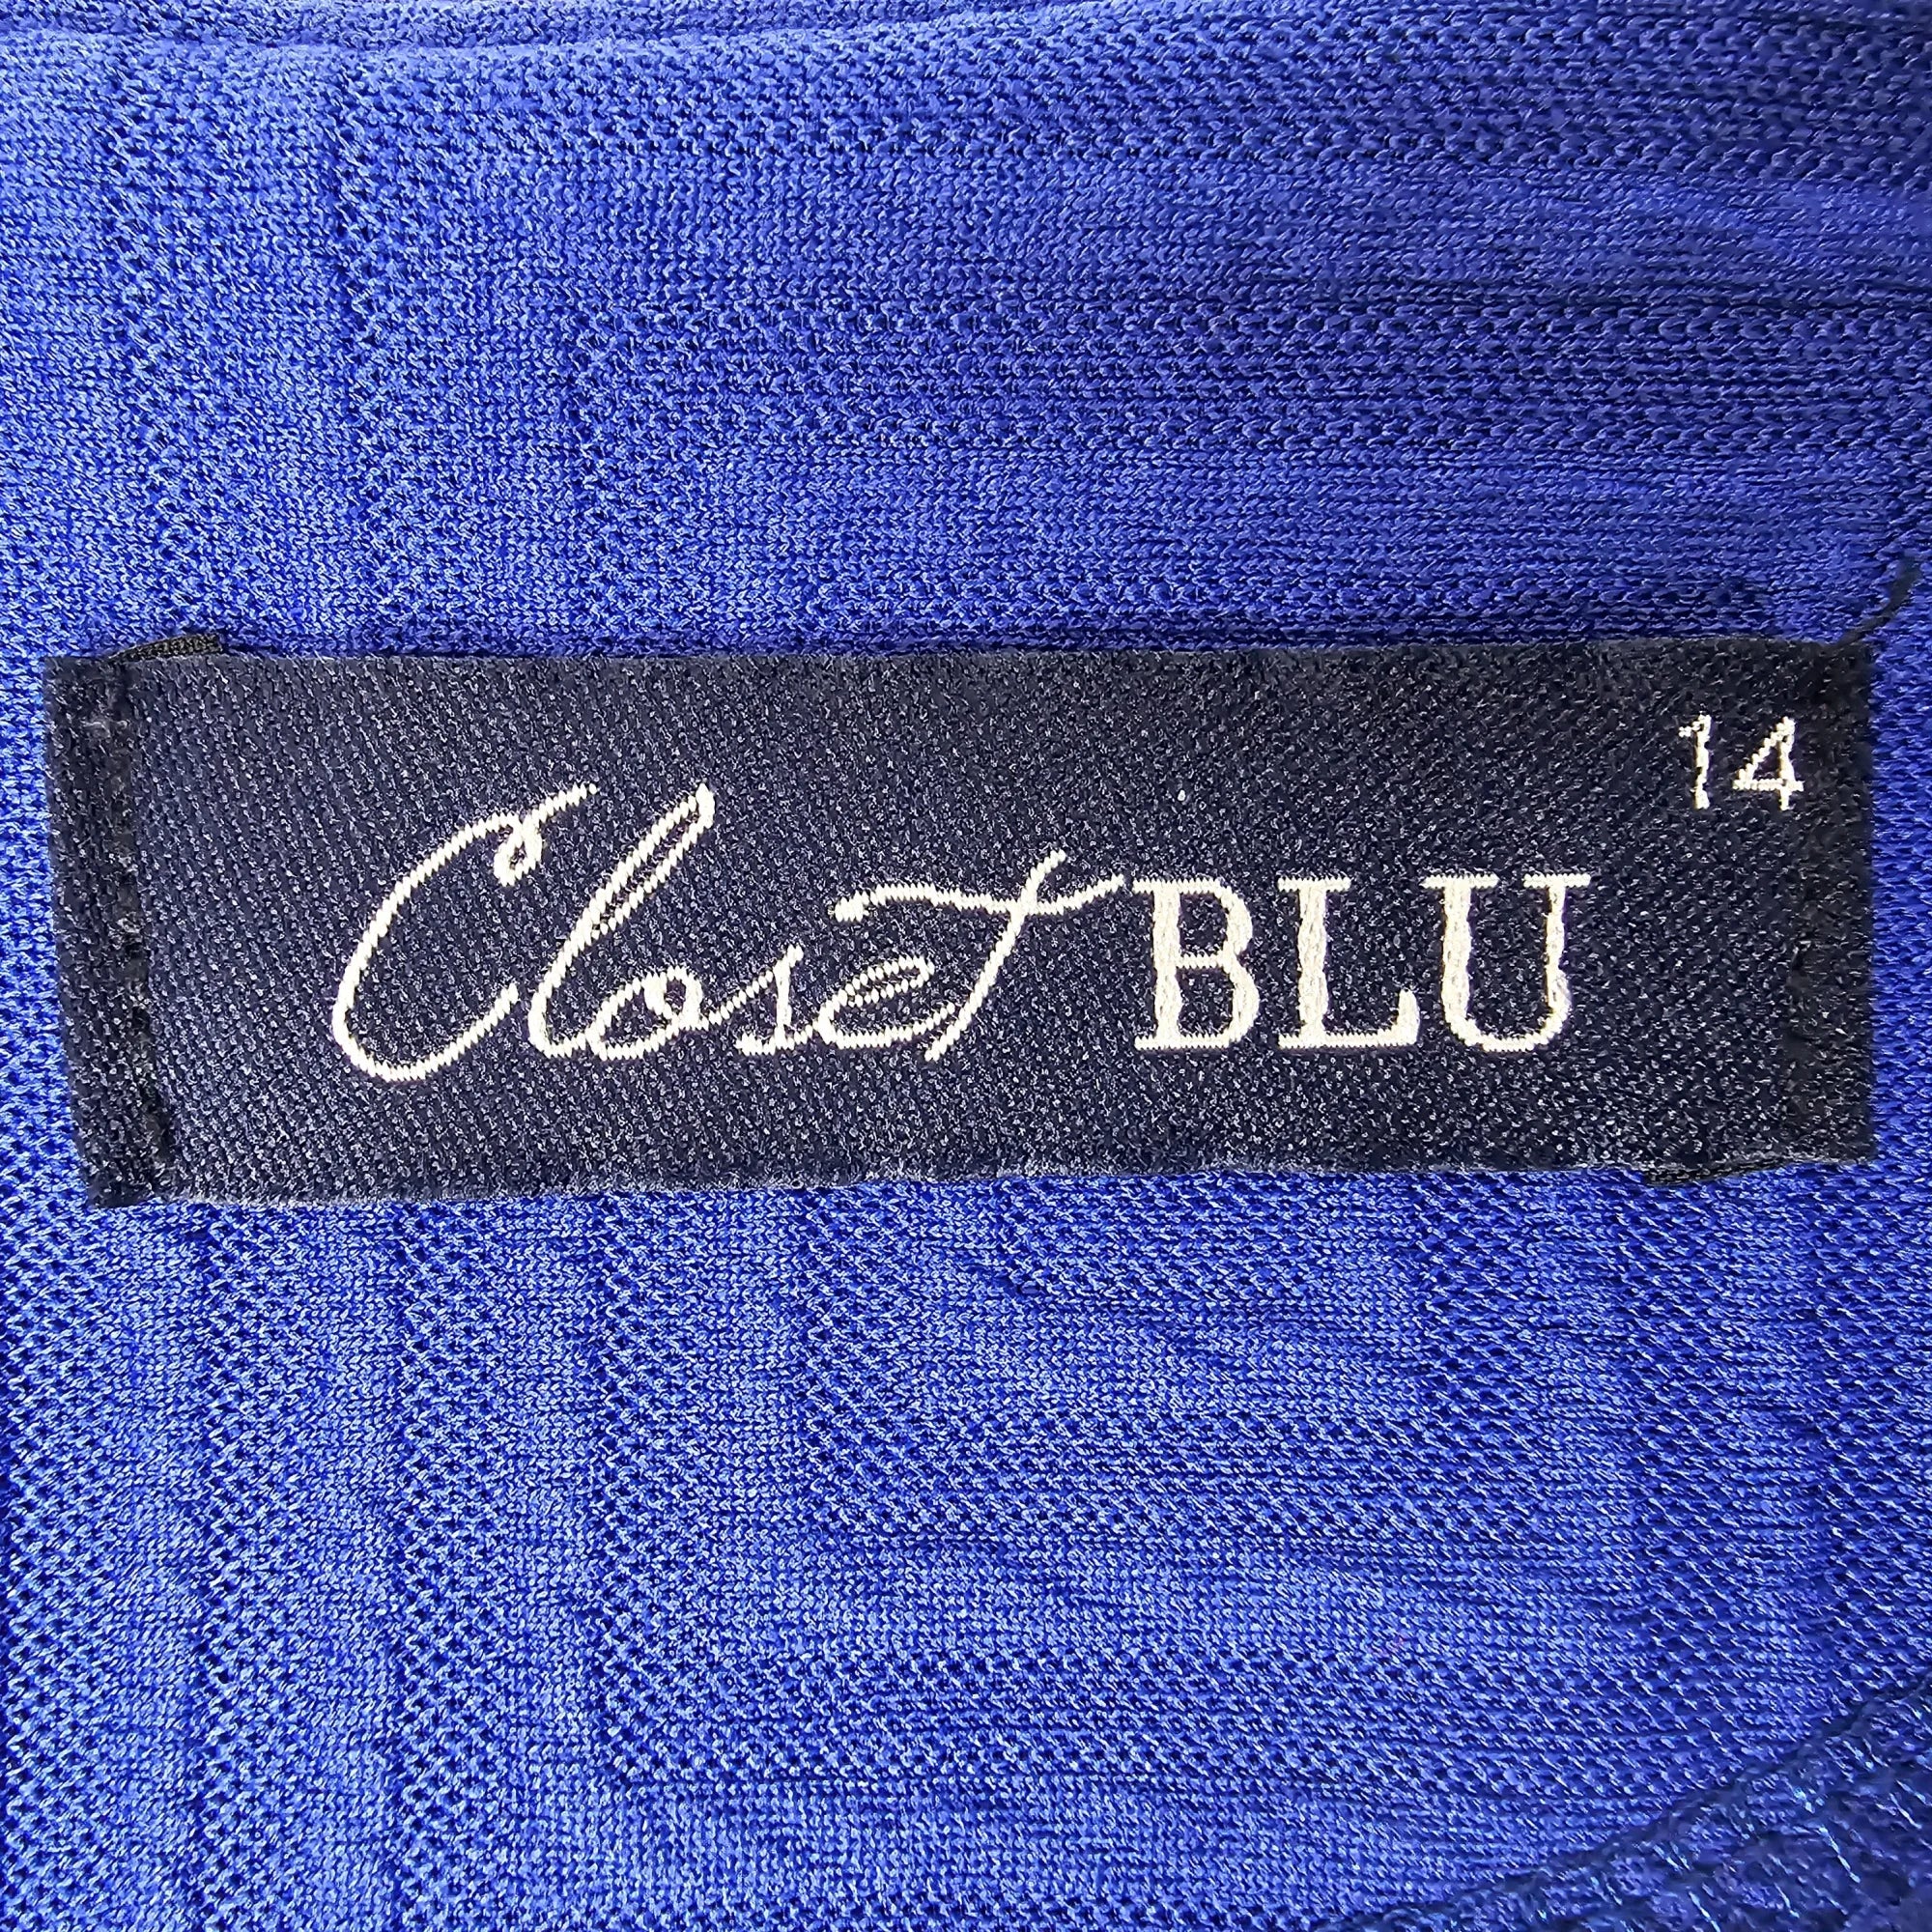 Womens Closet Blu A-Line Blue Dress UK 14 - Dresses - 7